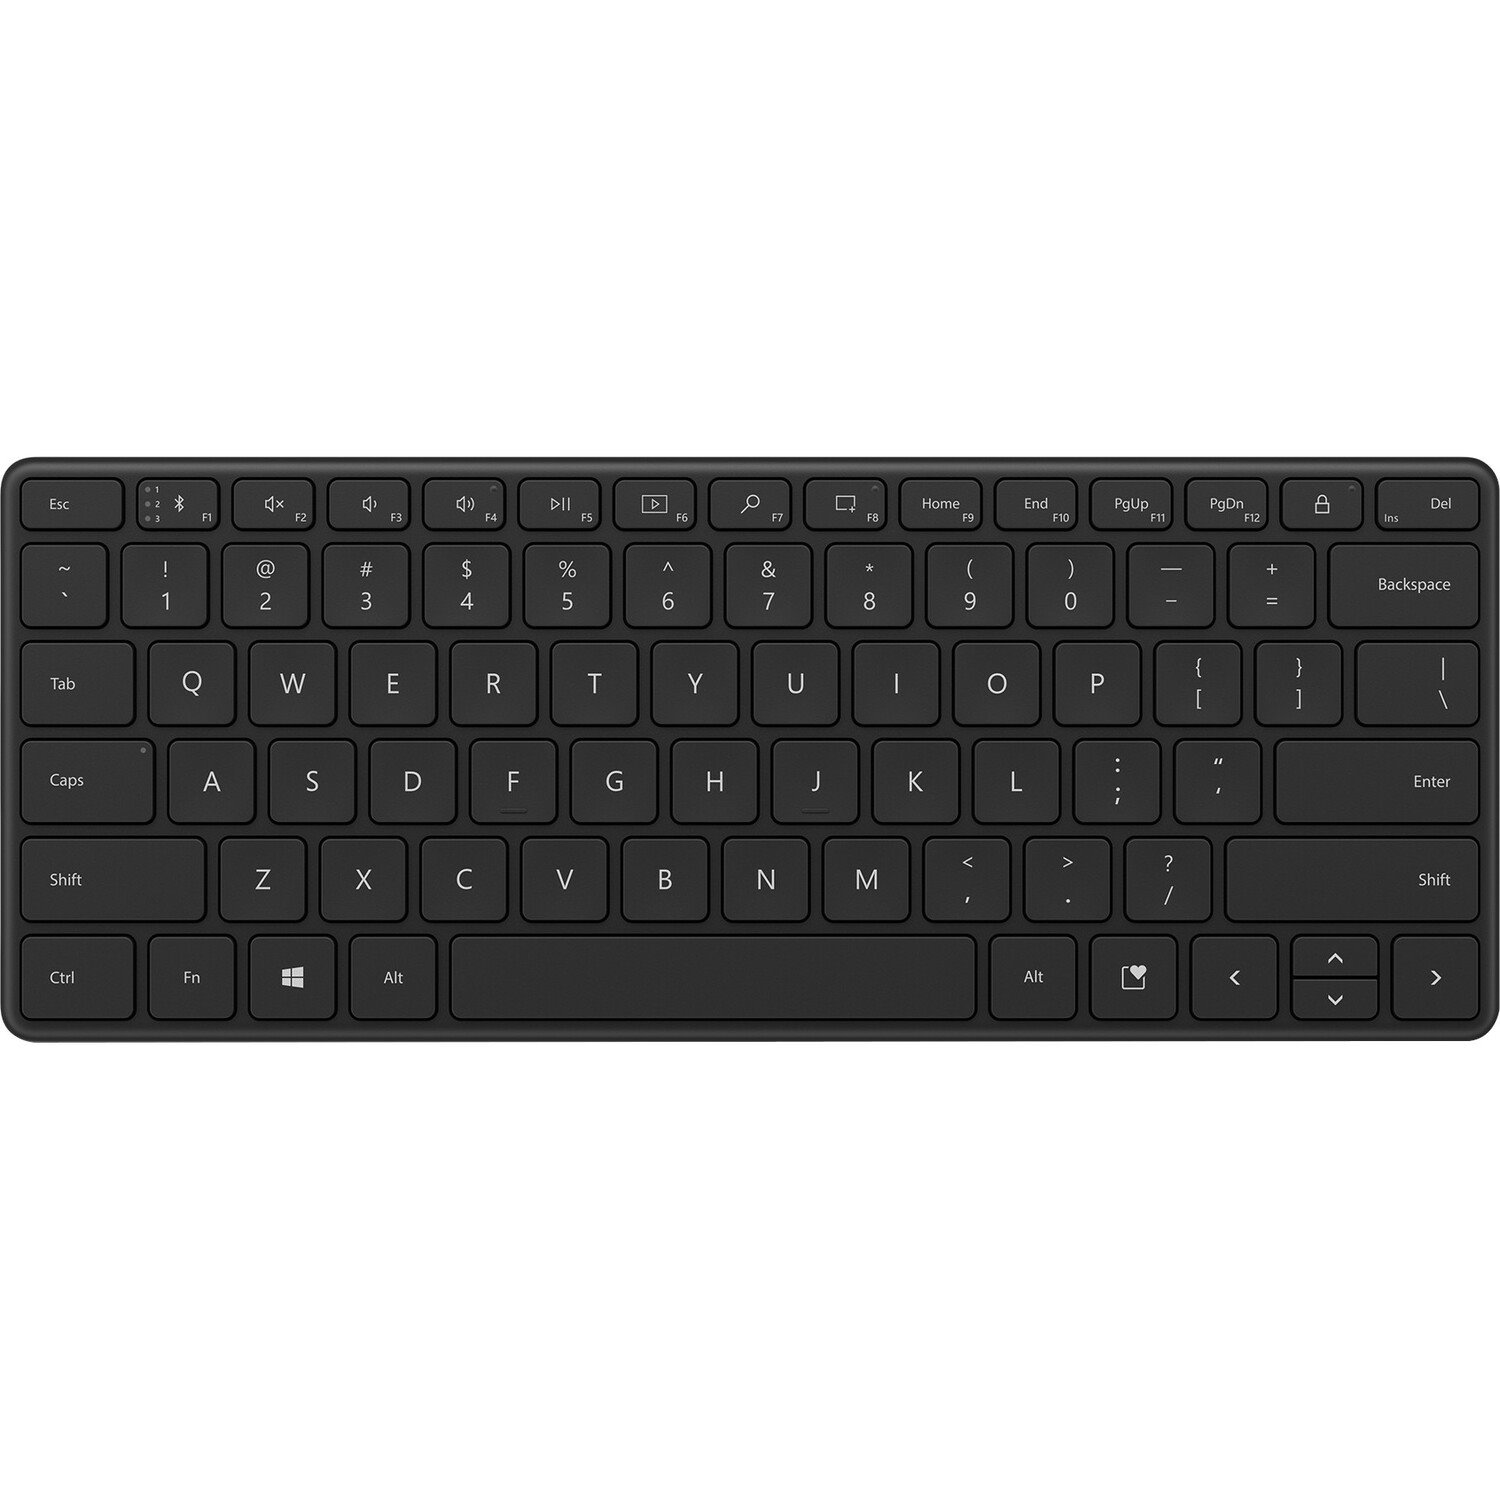 Microsoft Designer Compact Keyboard - Wireless Connectivity - English - Black